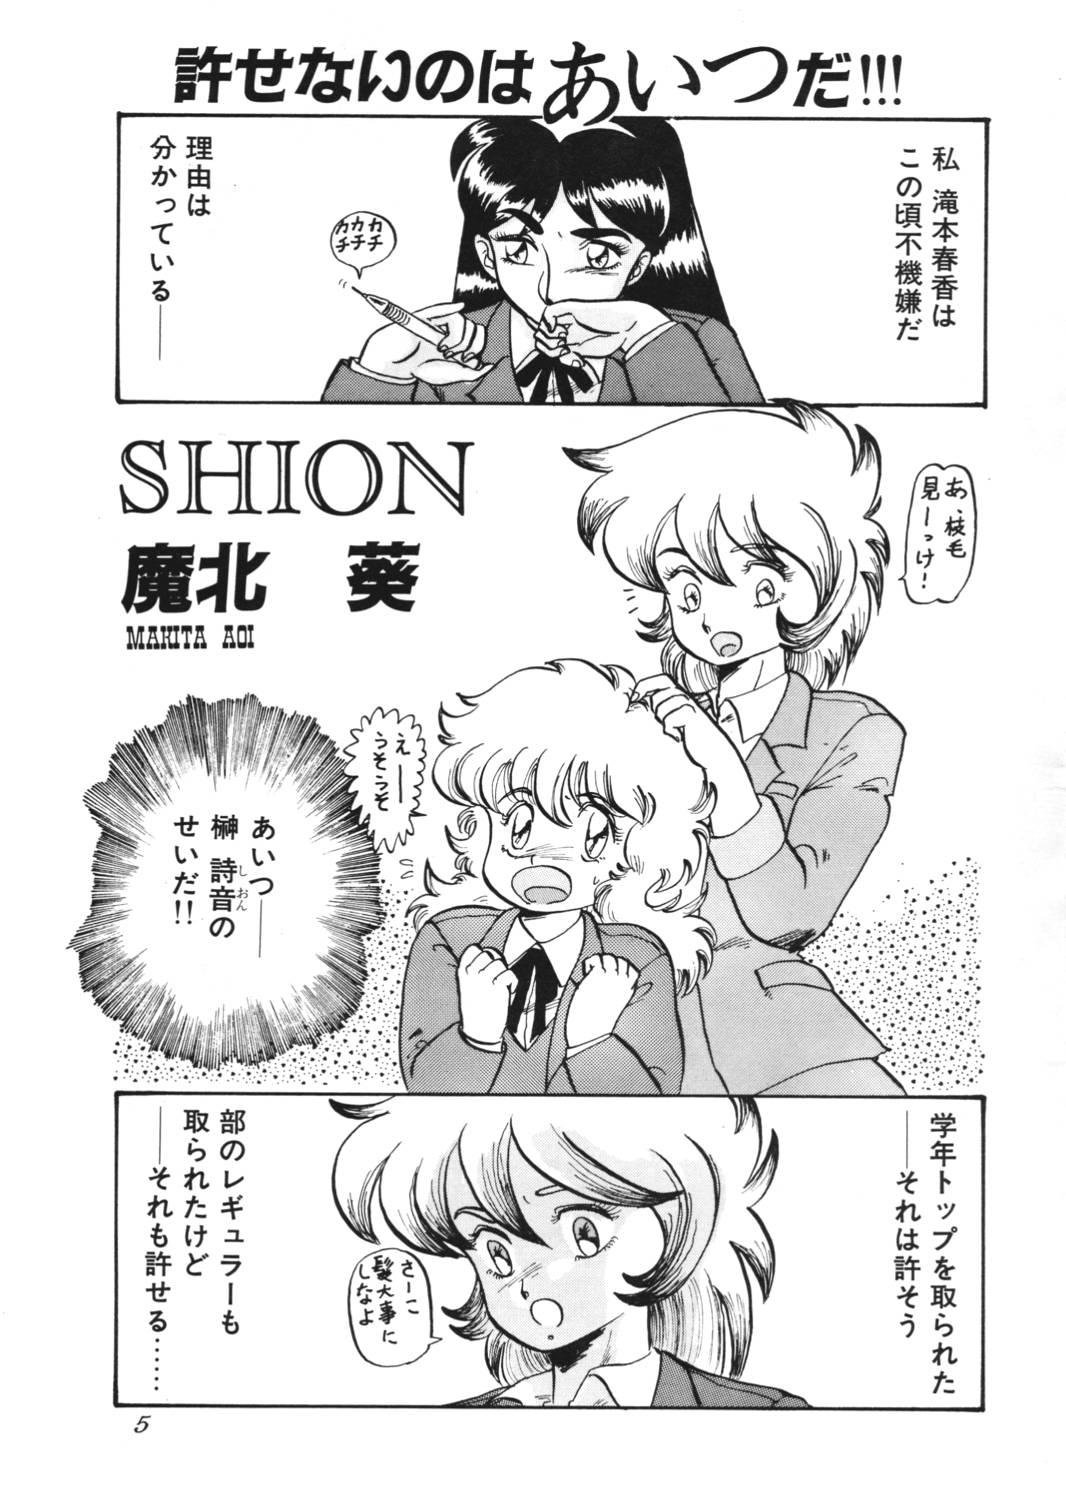 AOI Tsukushi Emergency H3 SHION 1989 4